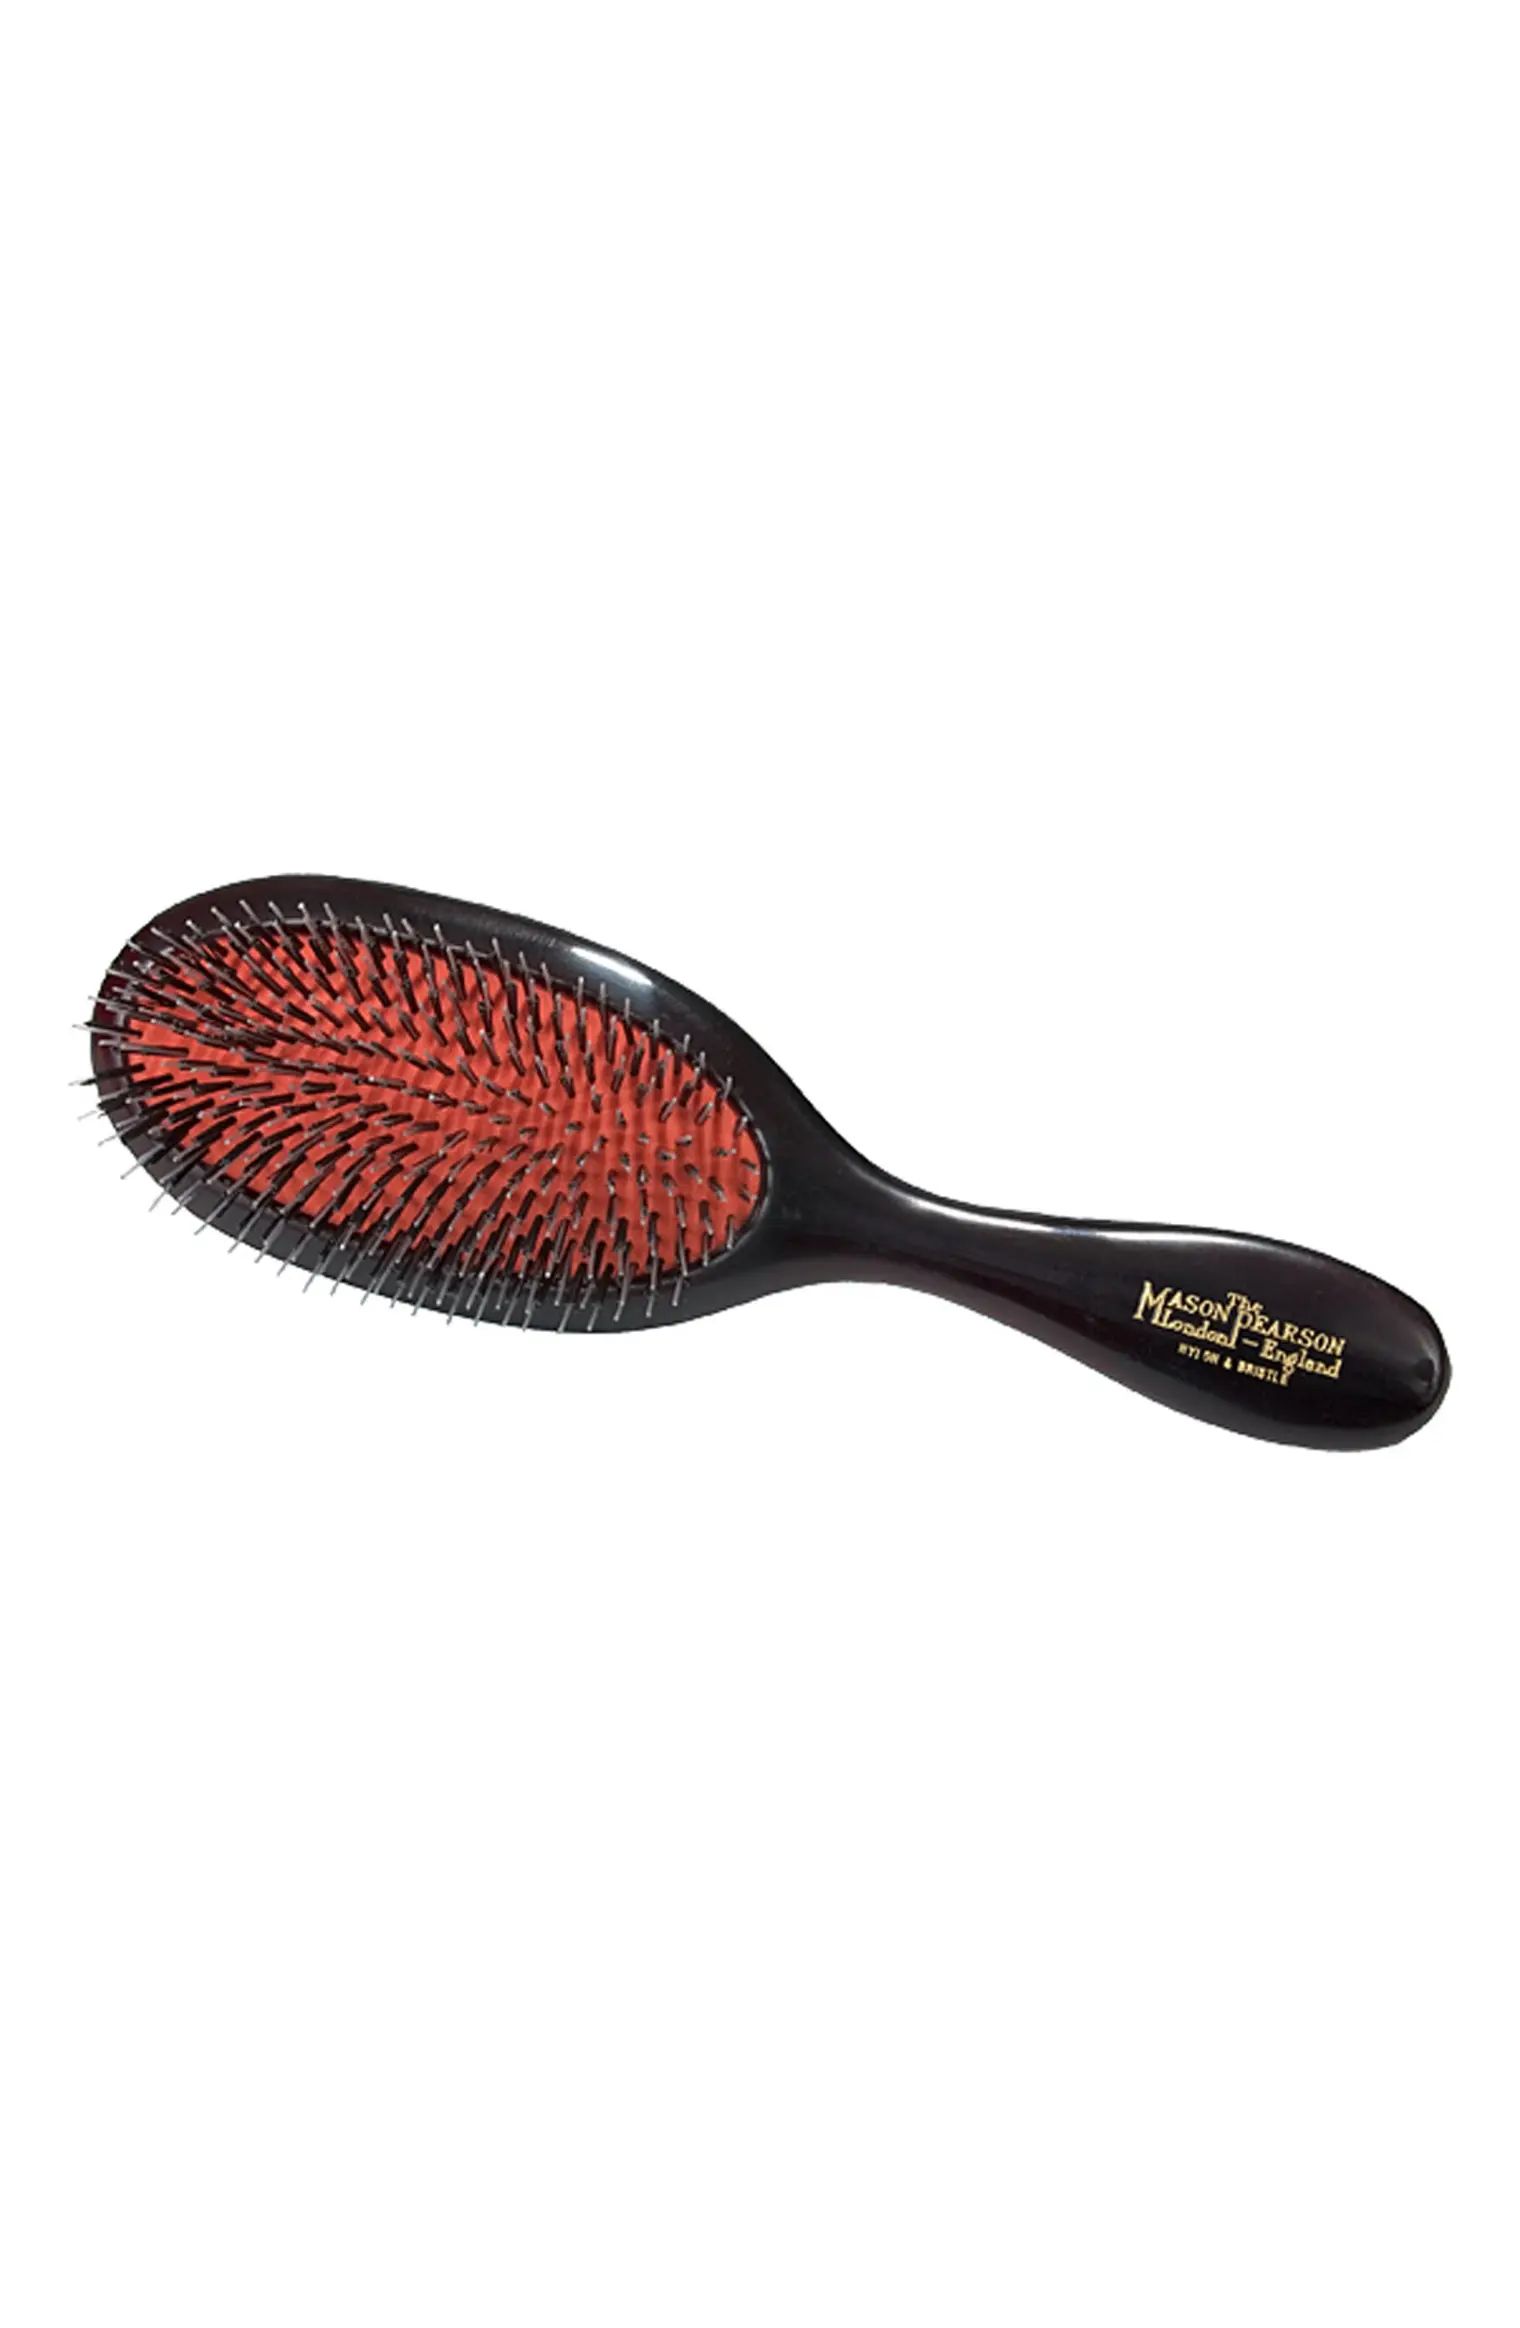 Handy Mixture Nylon & Boar Bristle Hair Brush | Nordstrom